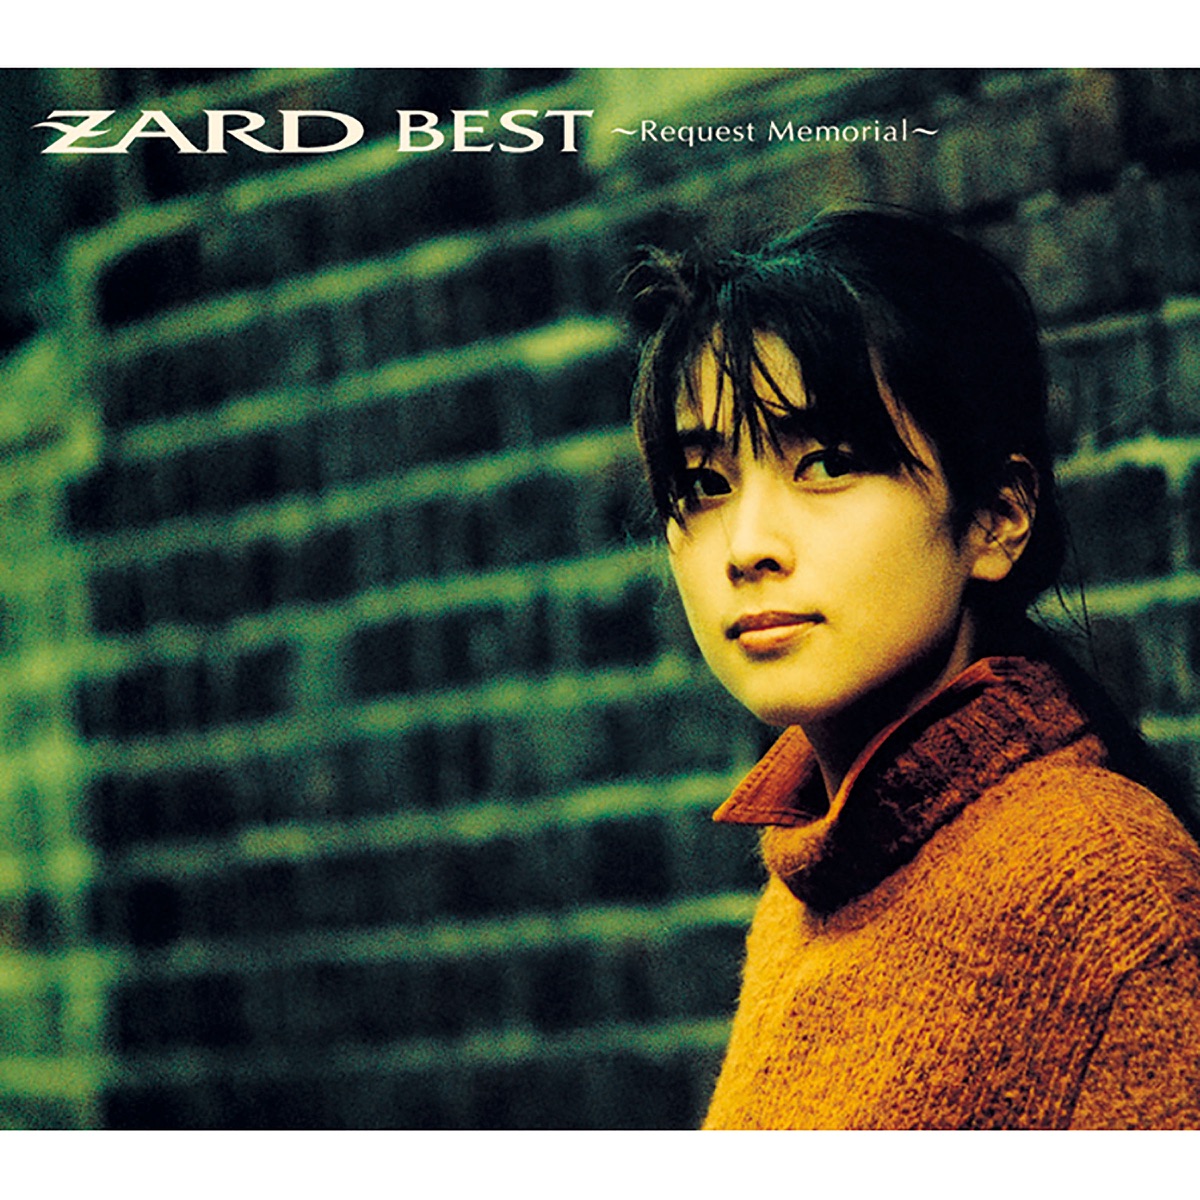 ZARD BEST ～Request Memorial～ - Album by ZARD - Apple Music